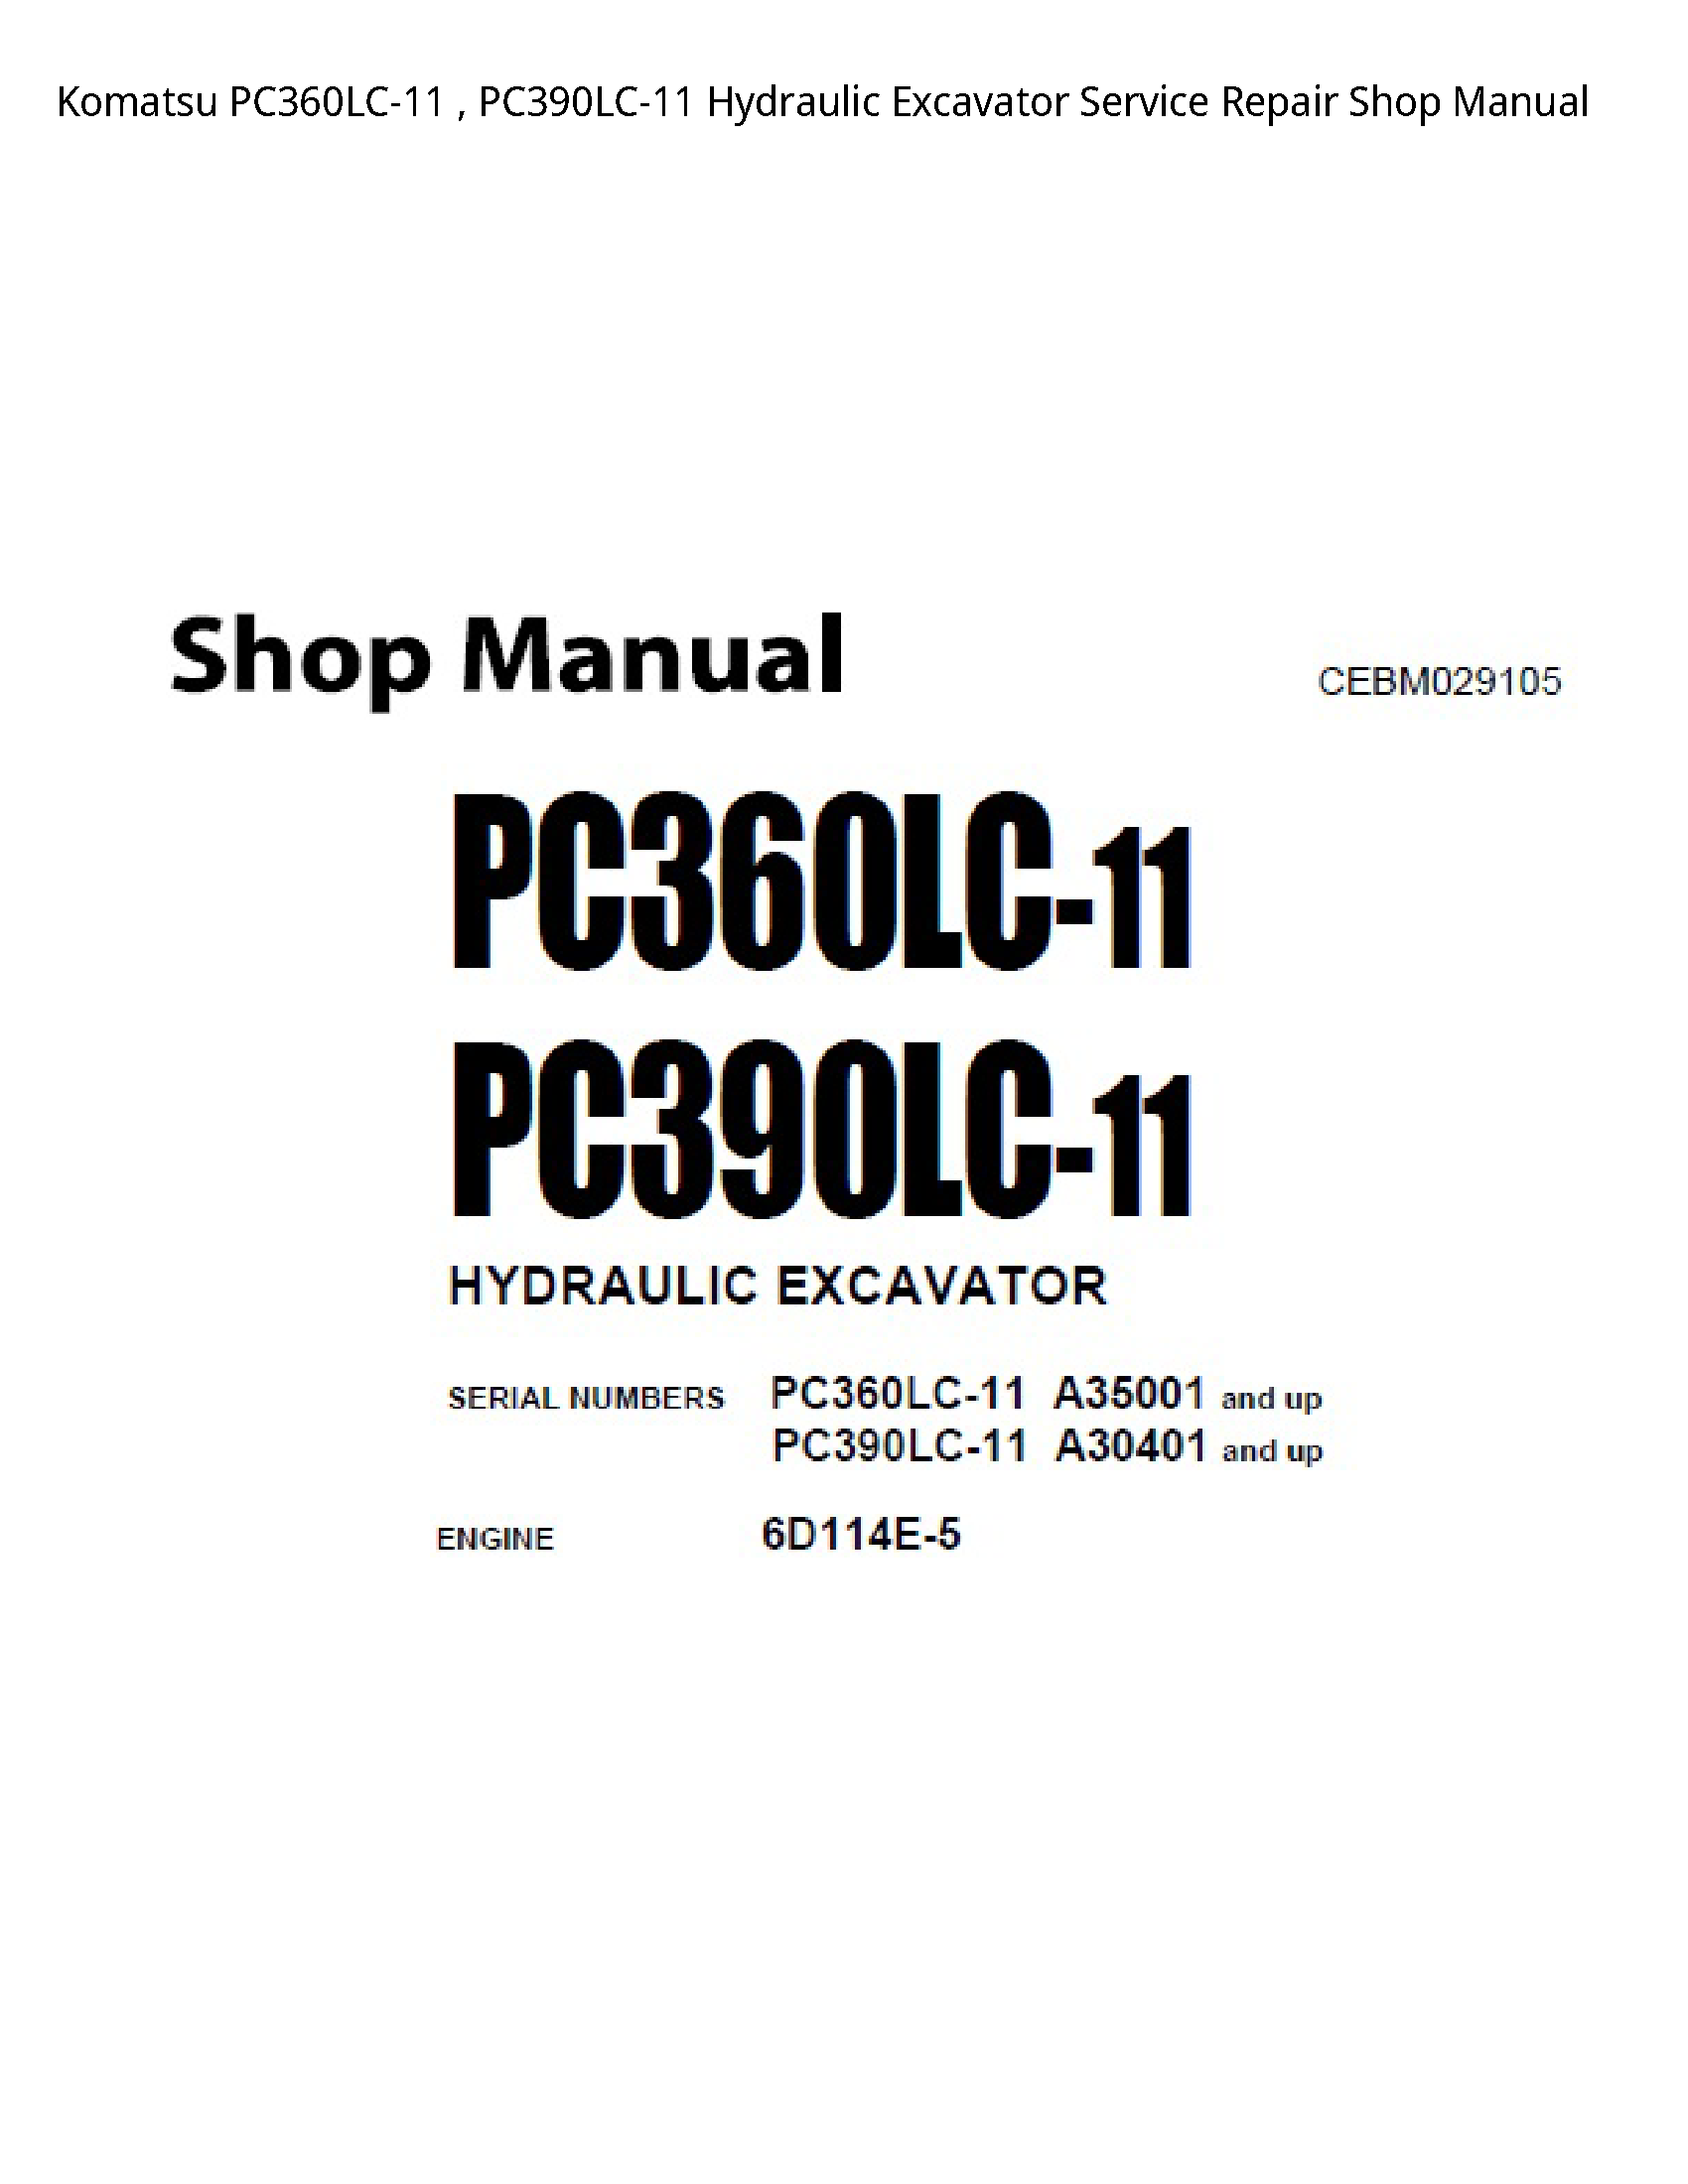 KOMATSU PC360LC-11 Hydraulic Excavator manual